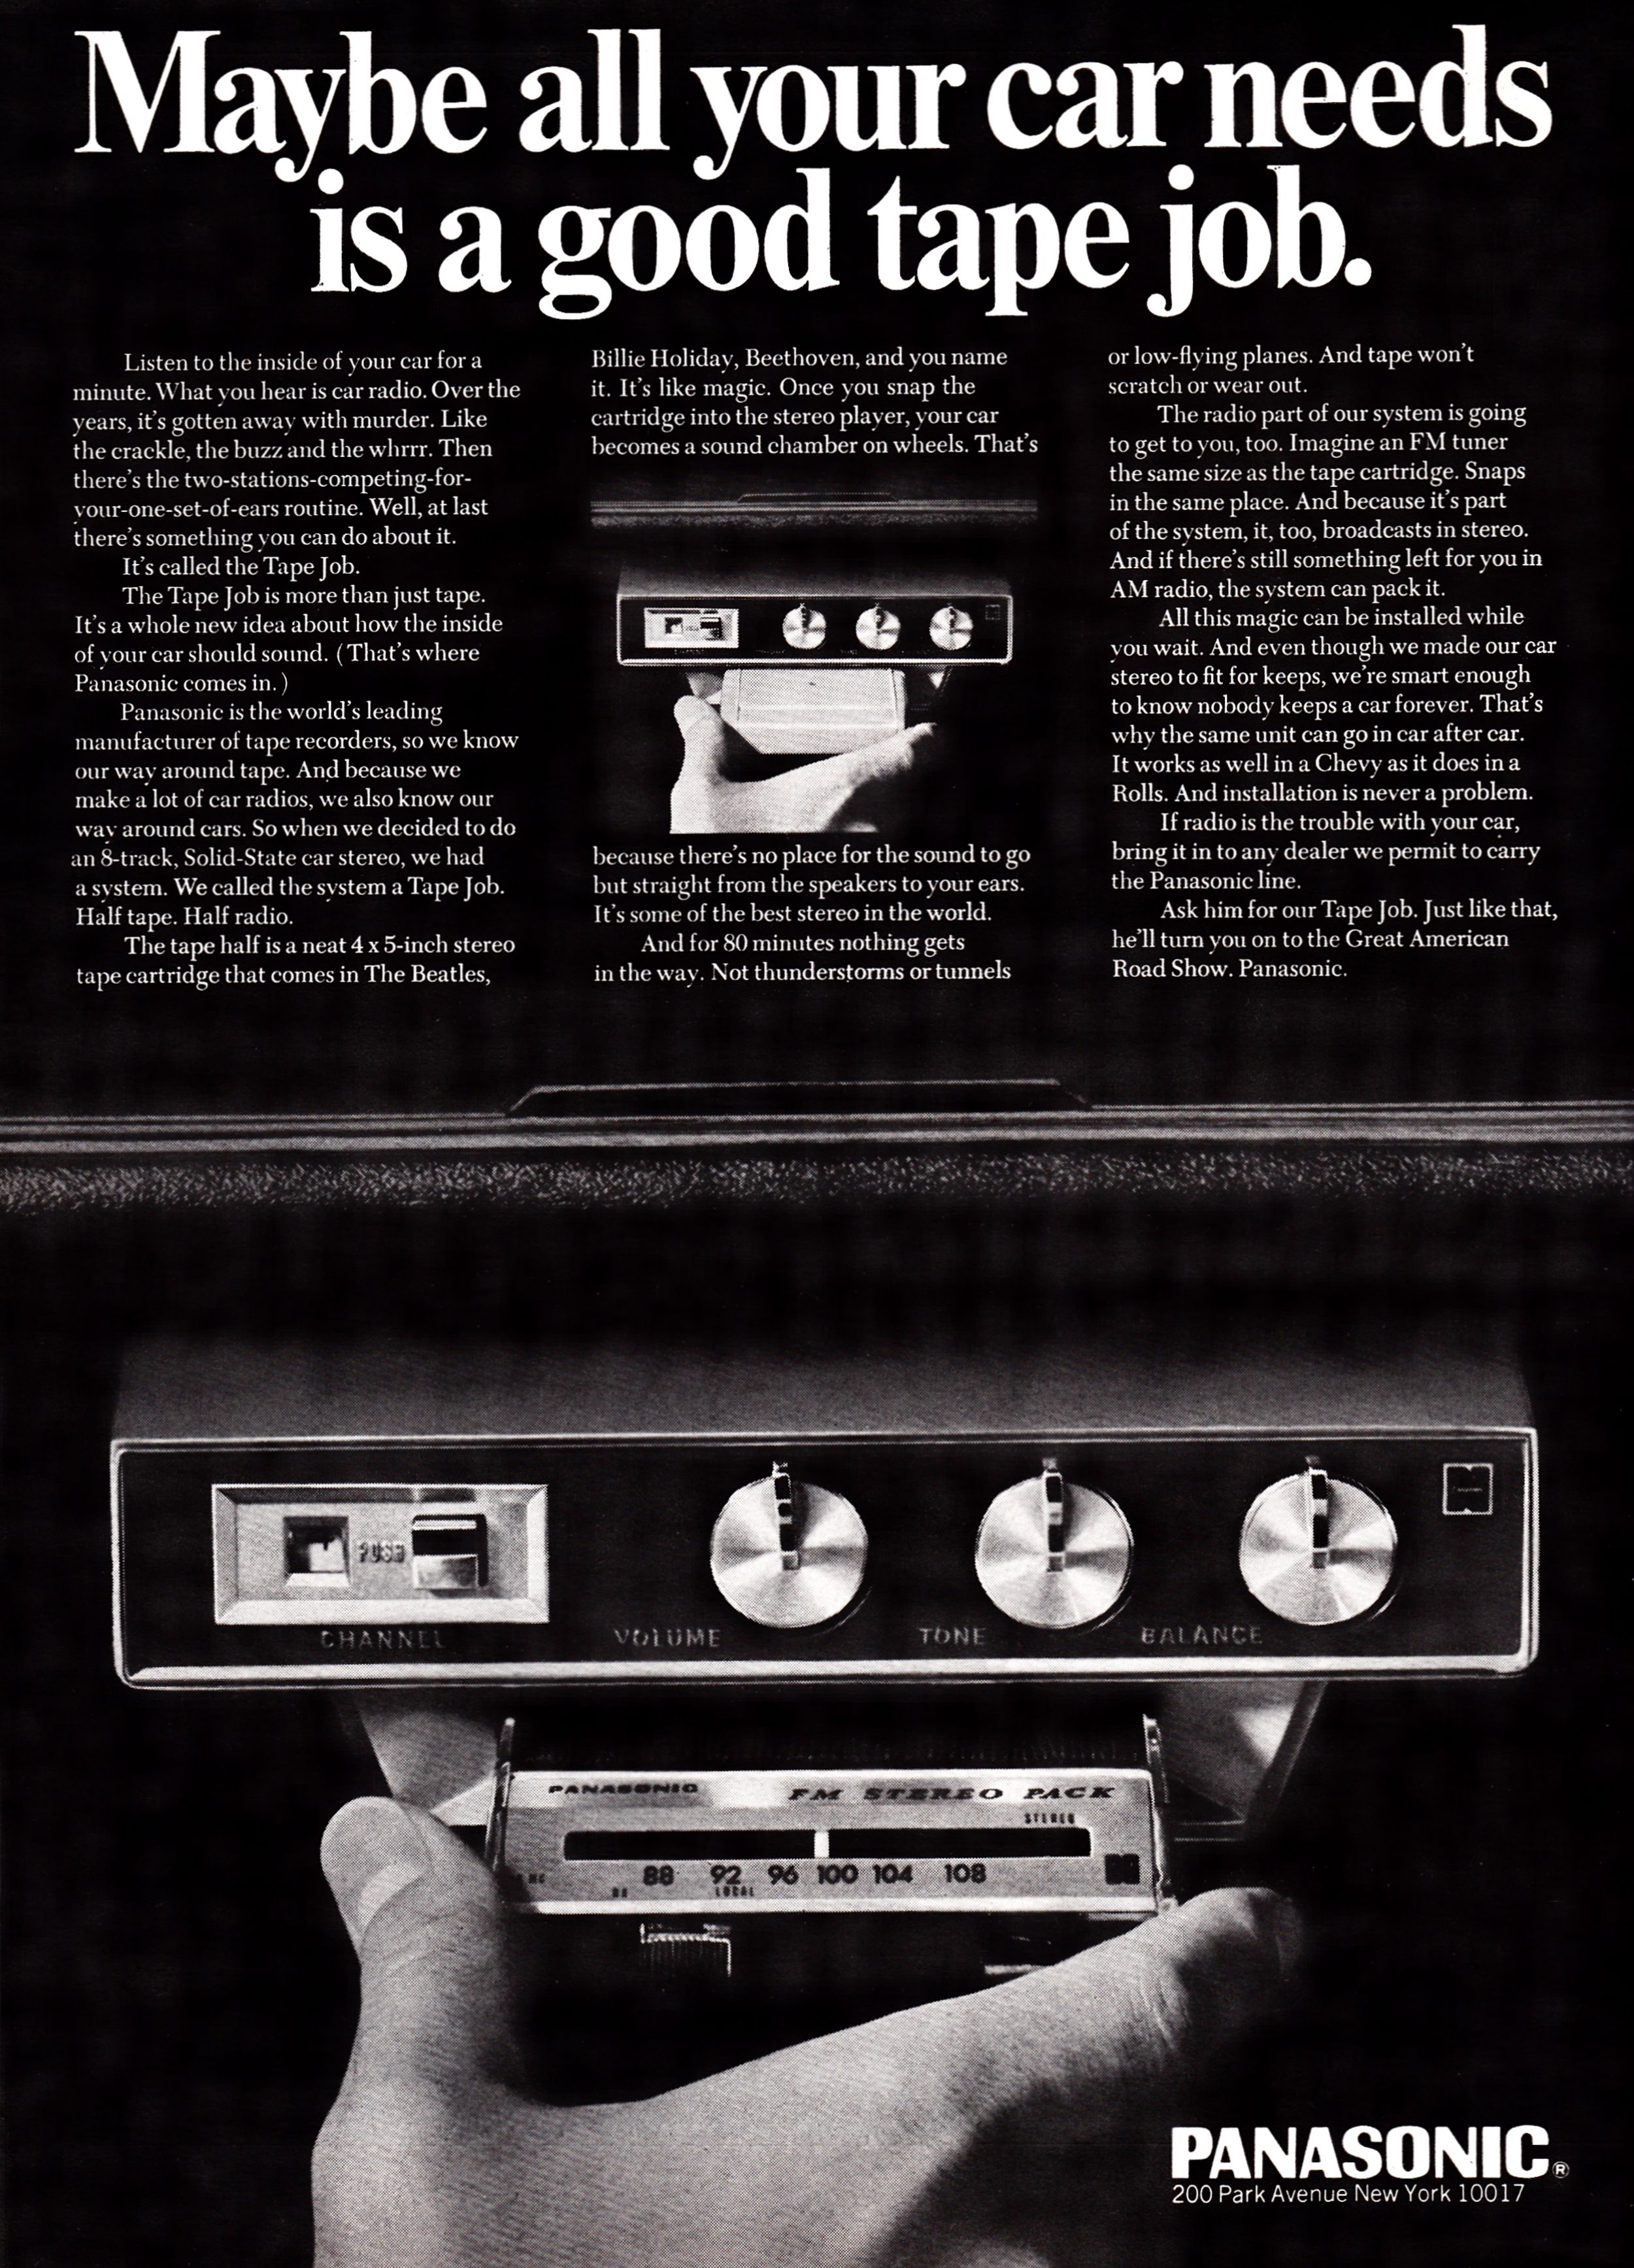 Vintage poster for a Panasonic radio.